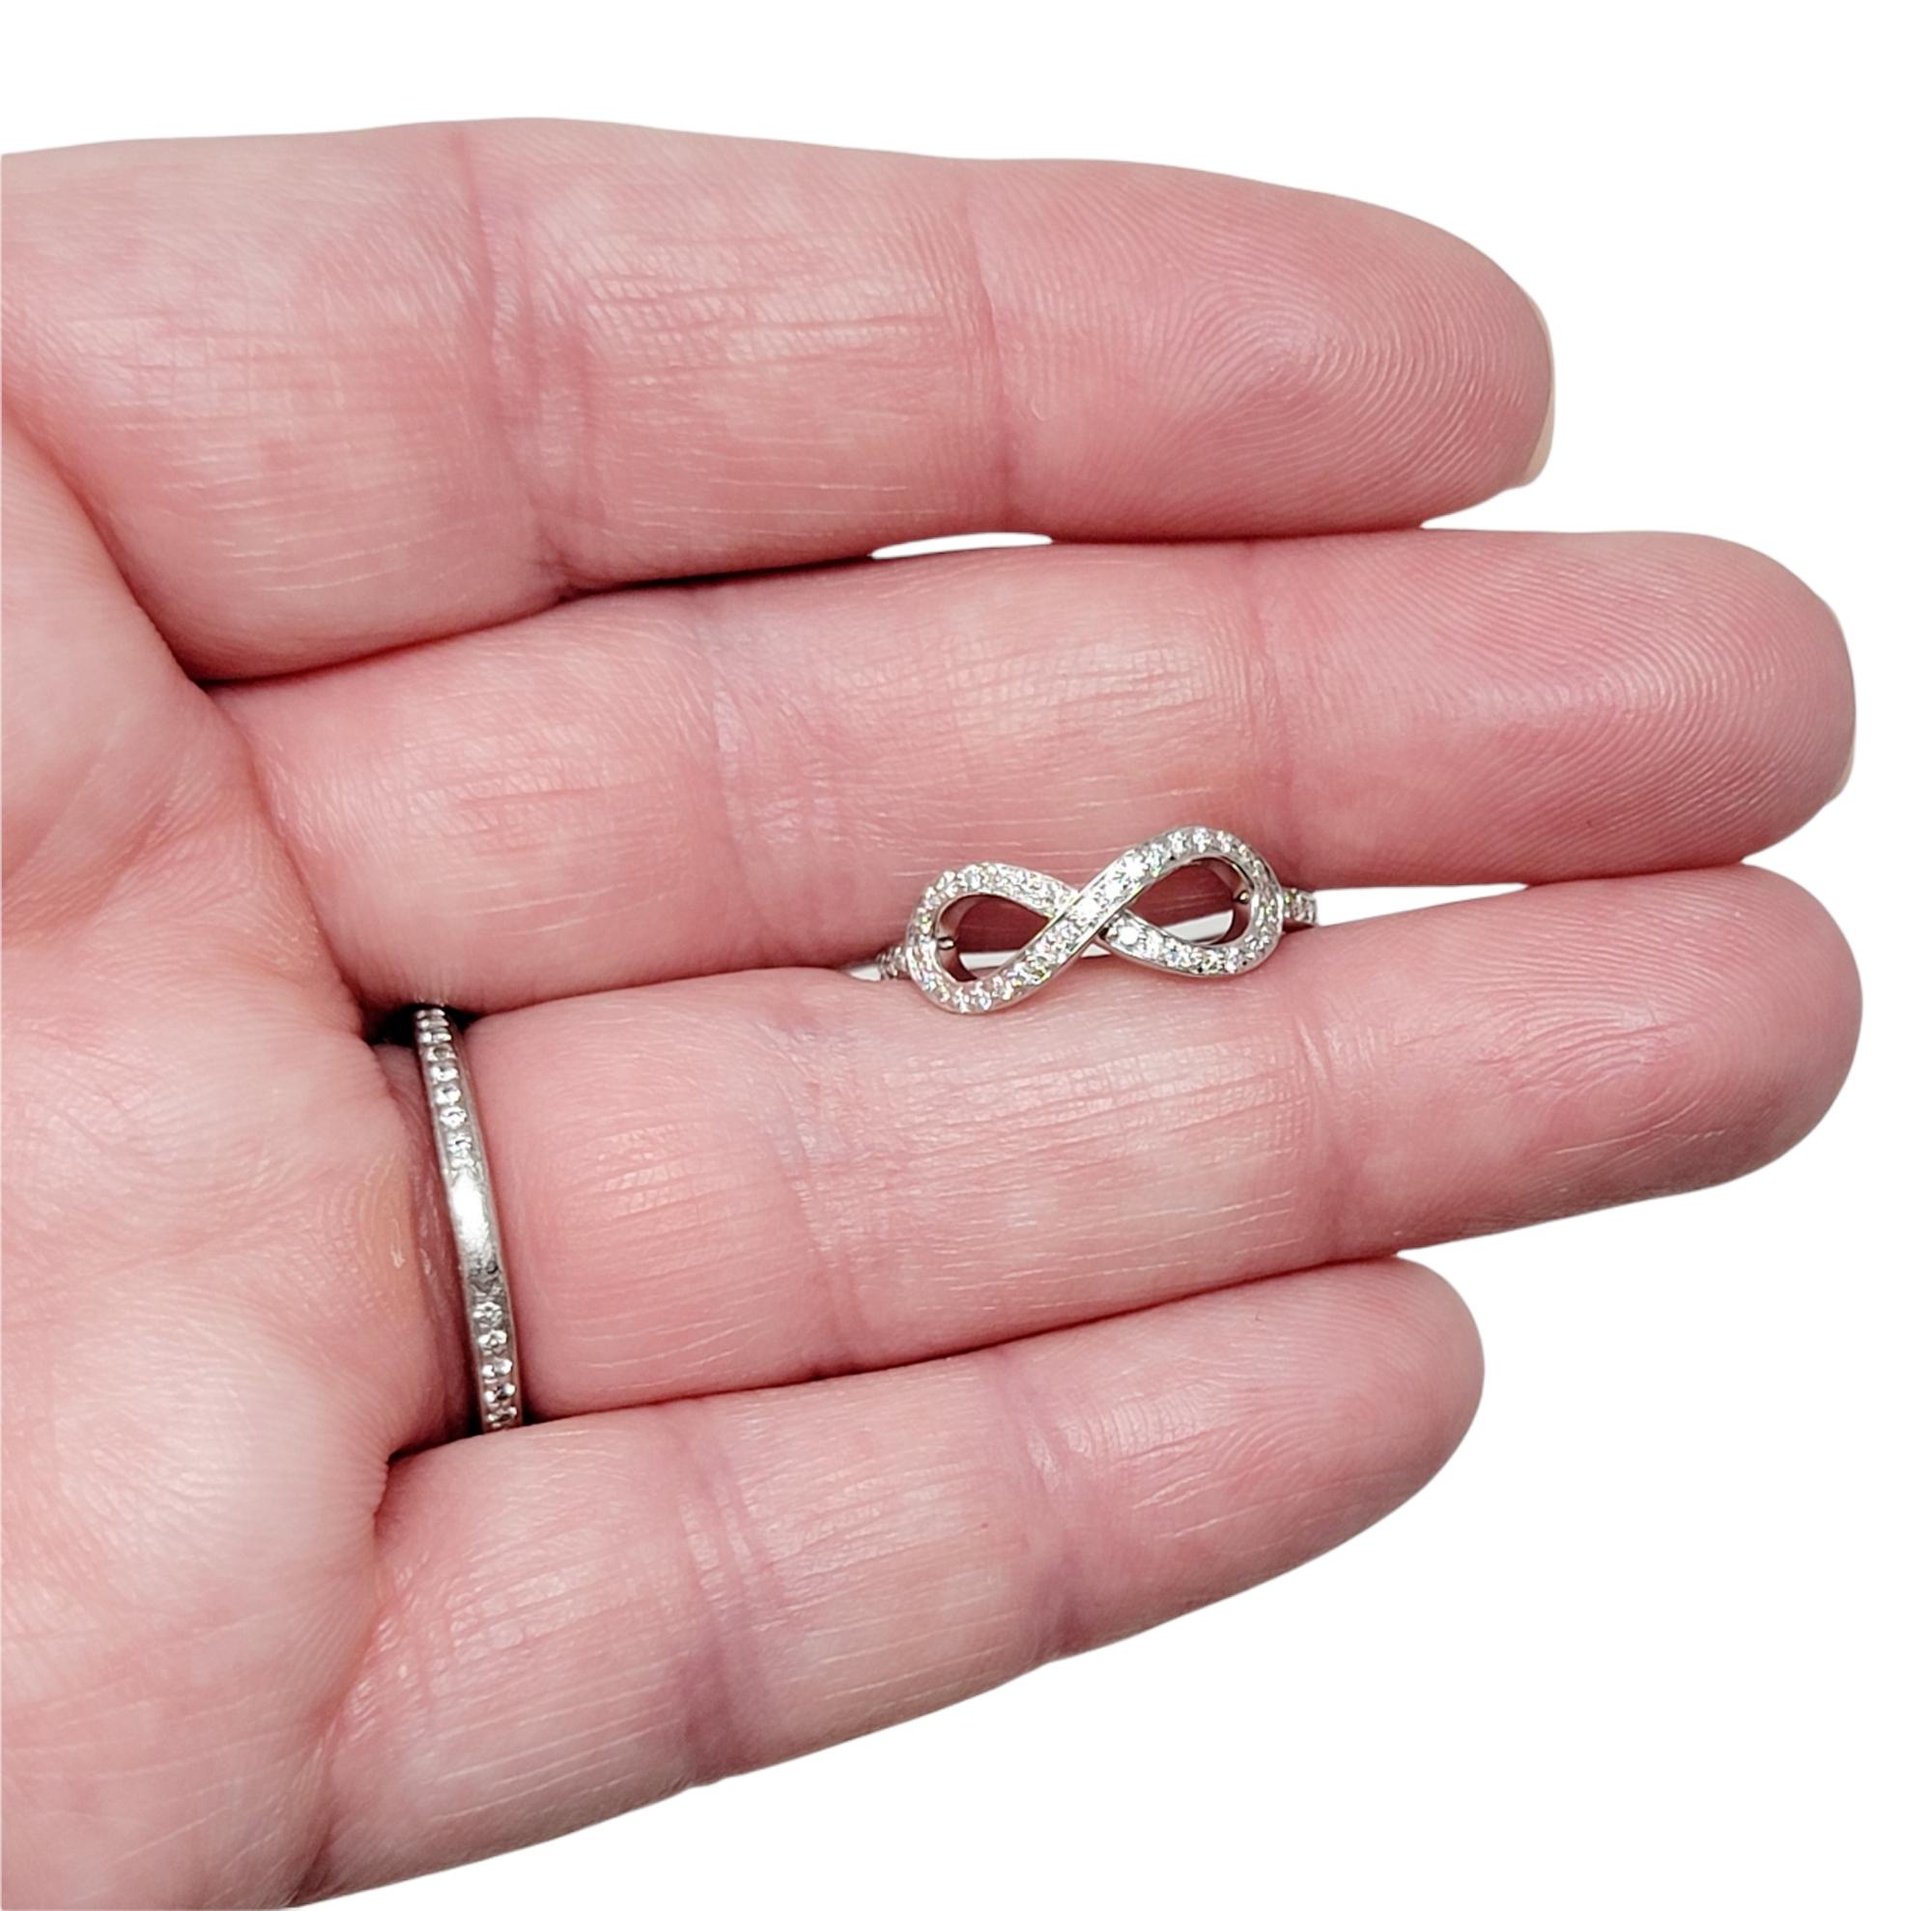 Tiffany & Co. Round Brilliant Pave Diamond Infinity Symbol Band Ring in Platinum 7